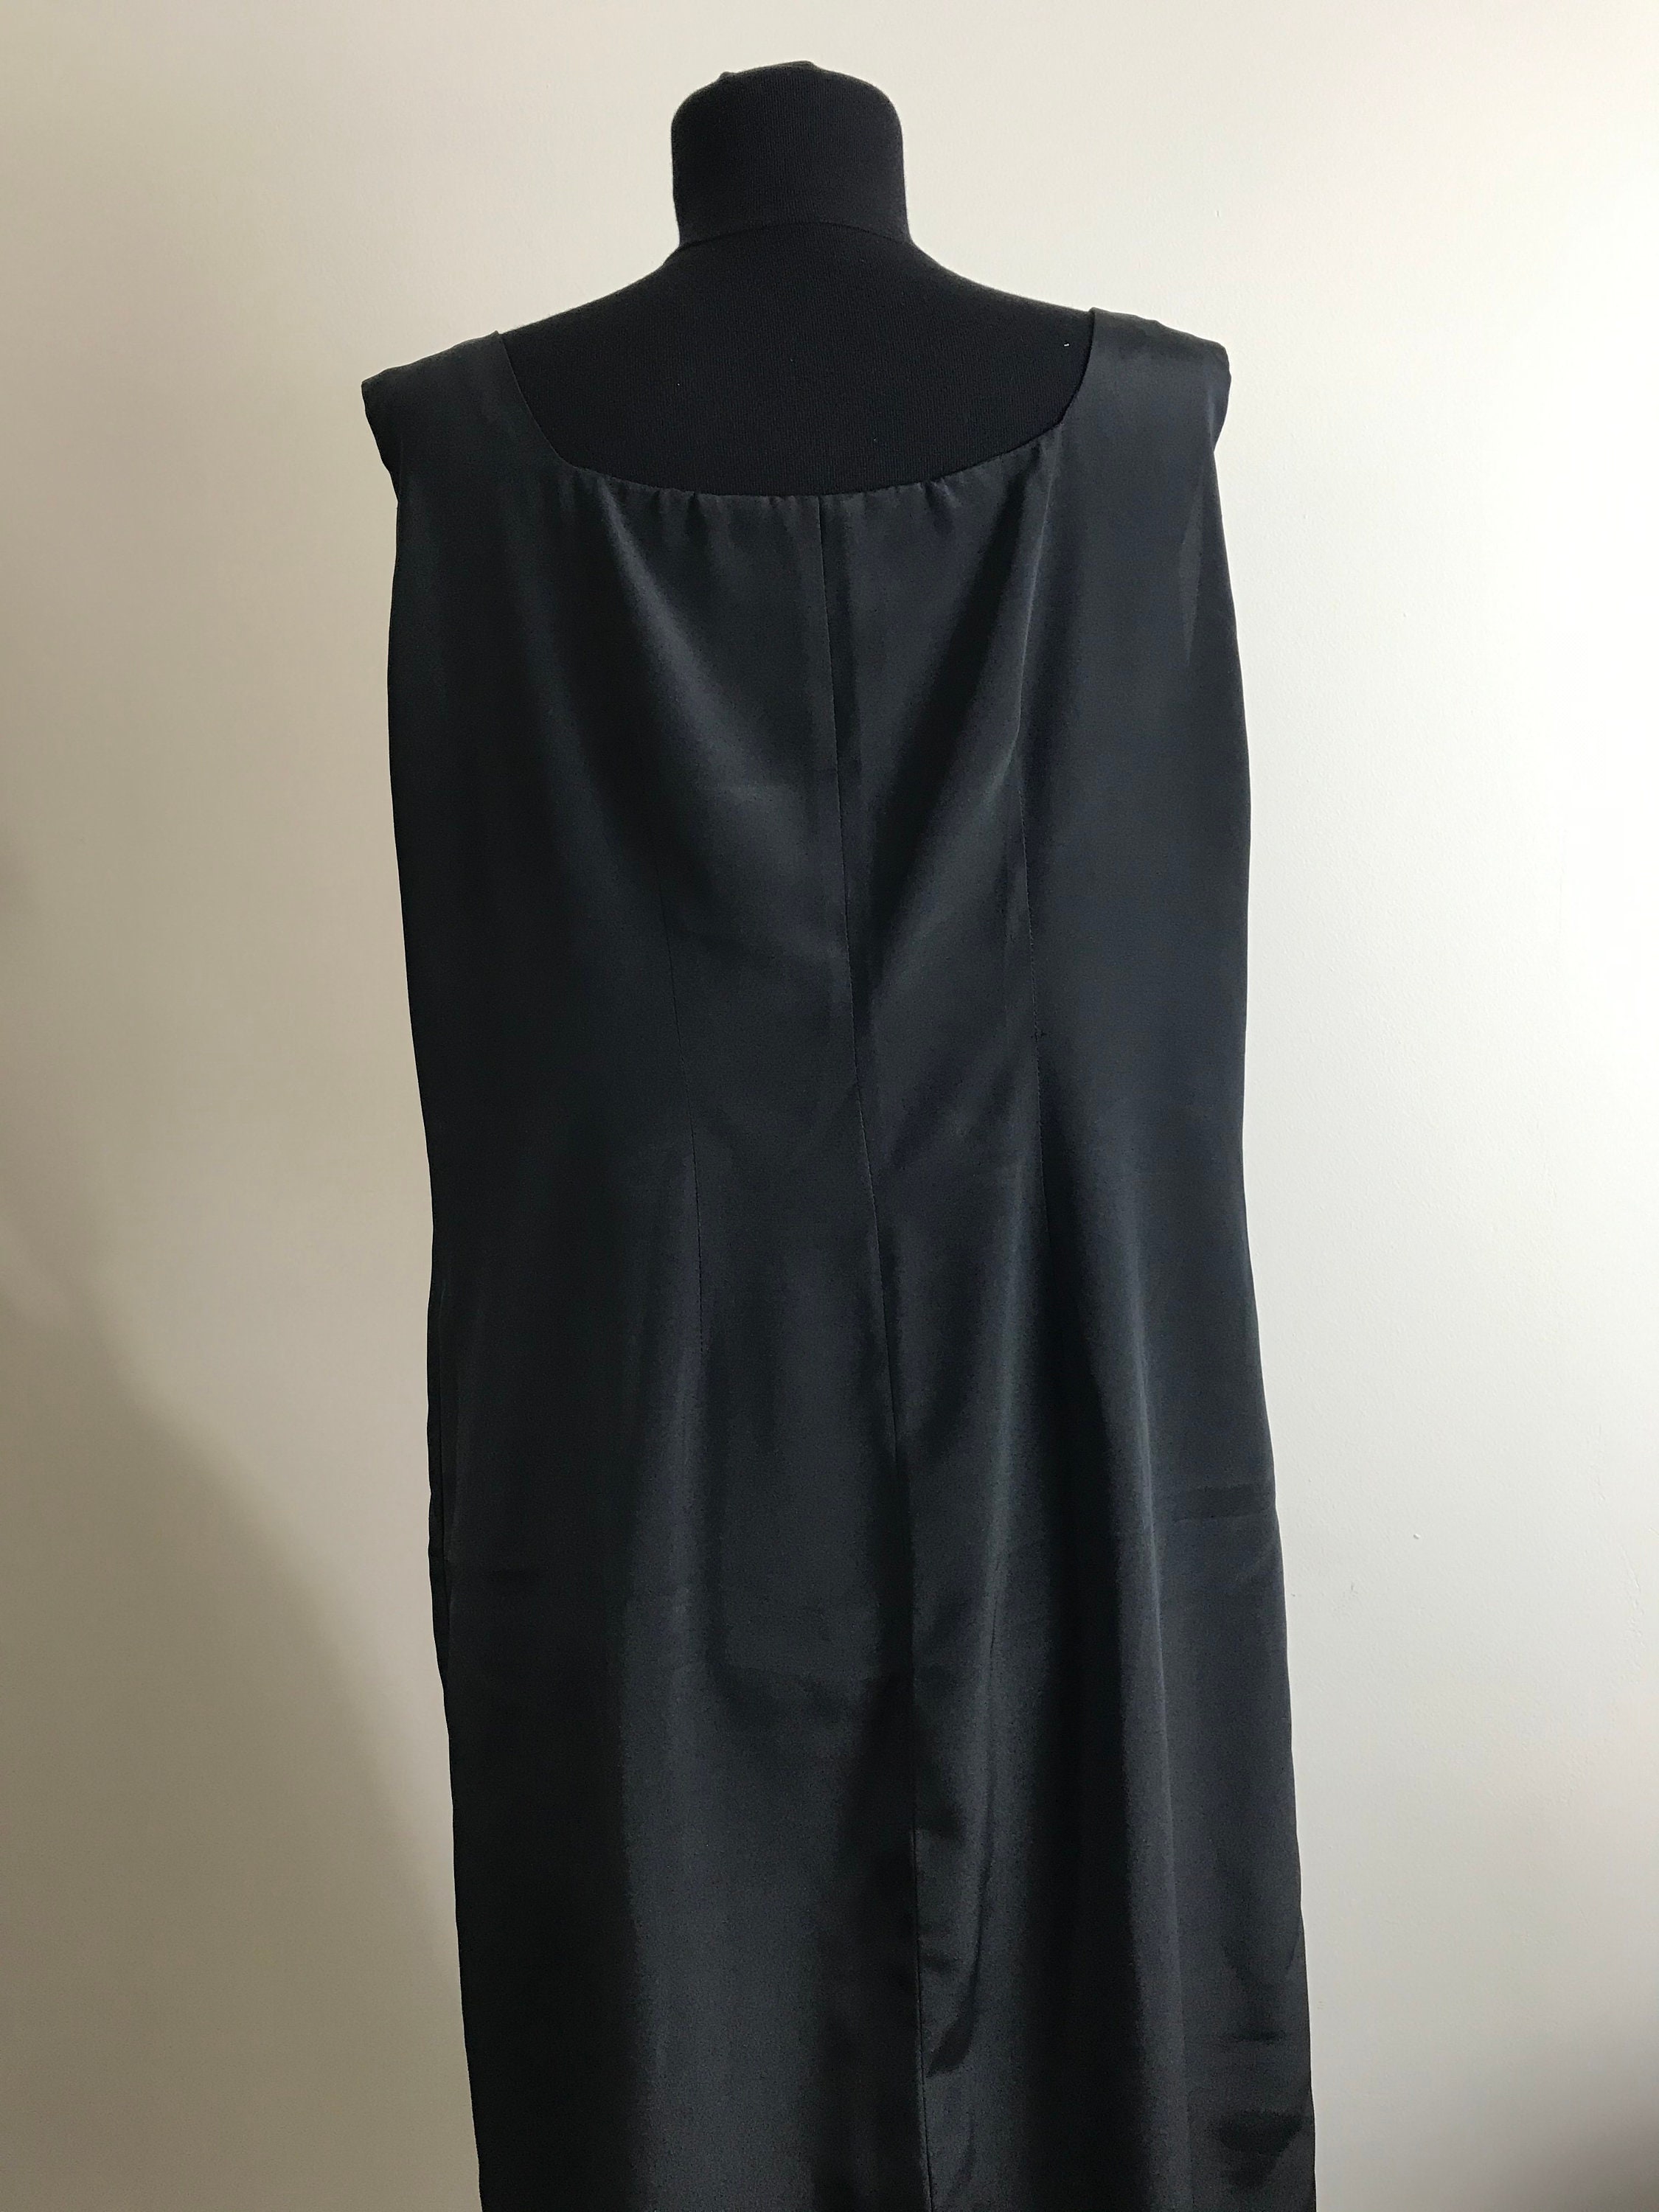 1980s Vintage Sleeveless Cocktail Dress / Black Party Dress / - Etsy